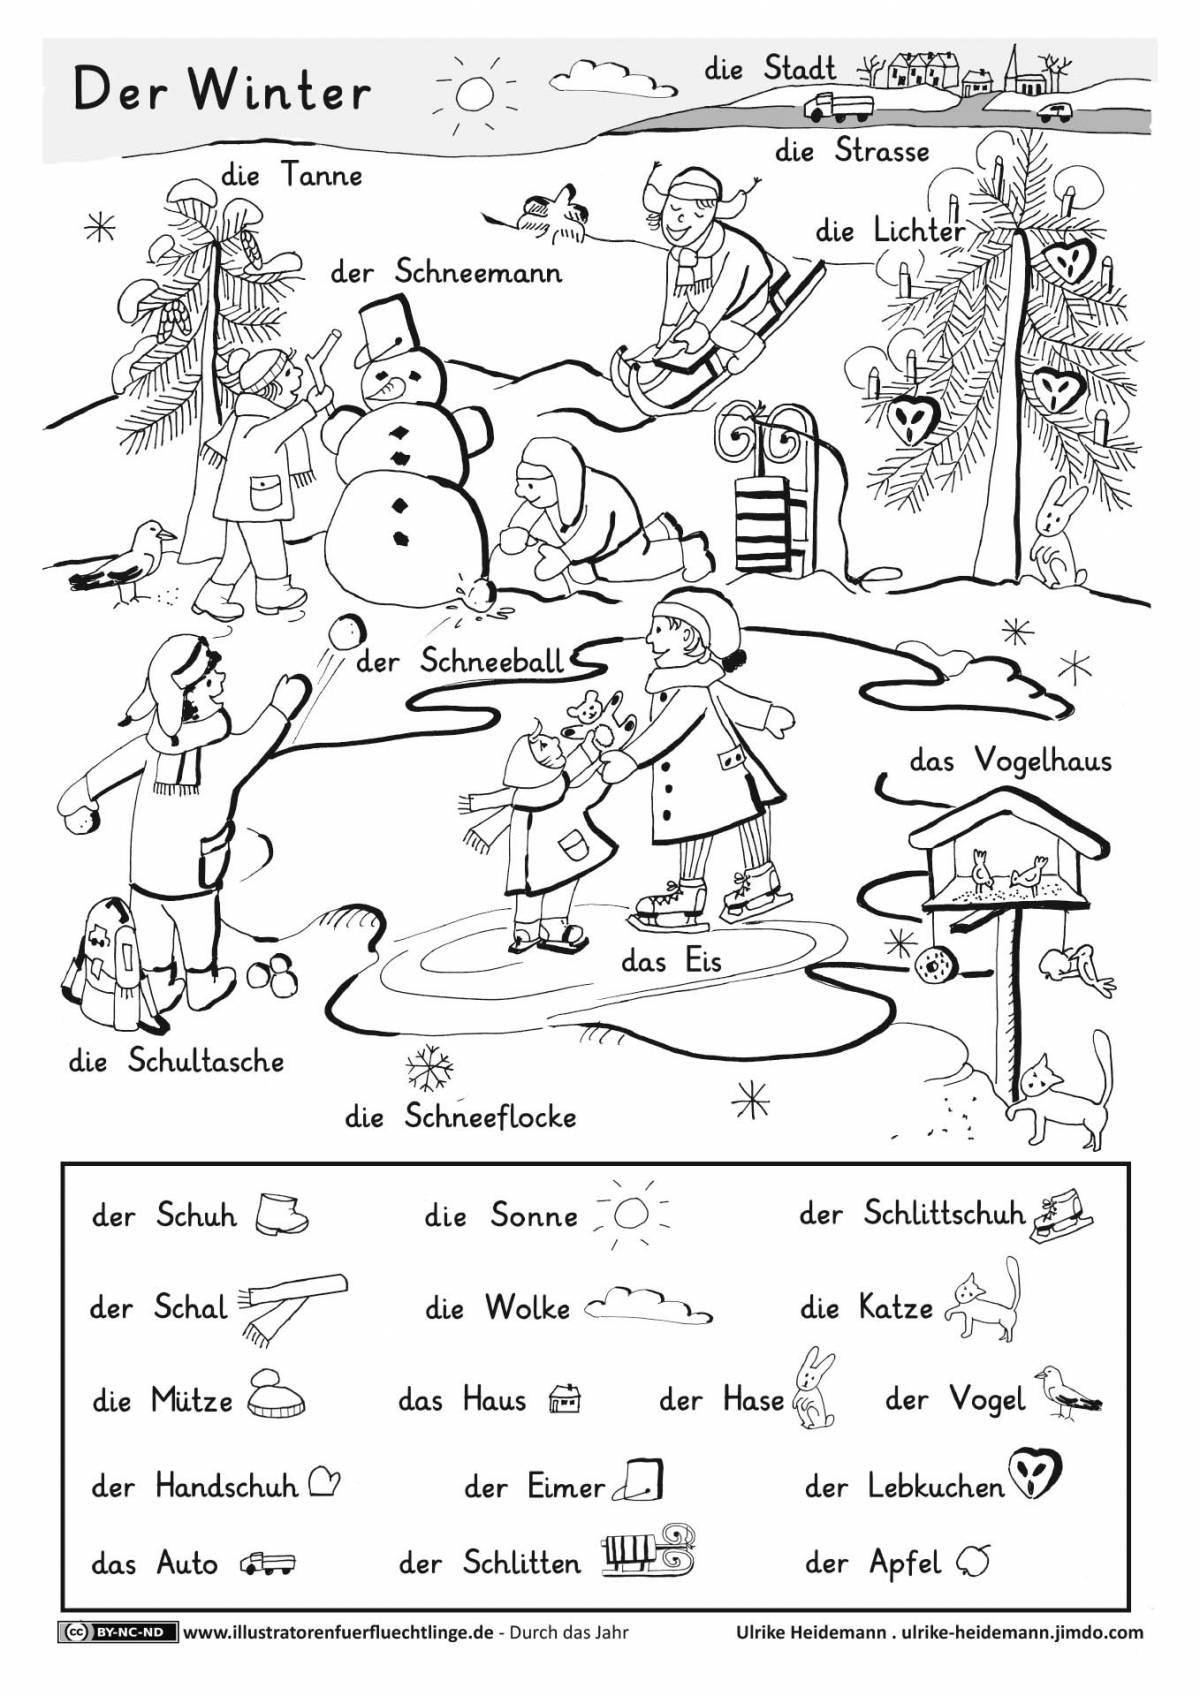 Charming german coloring book